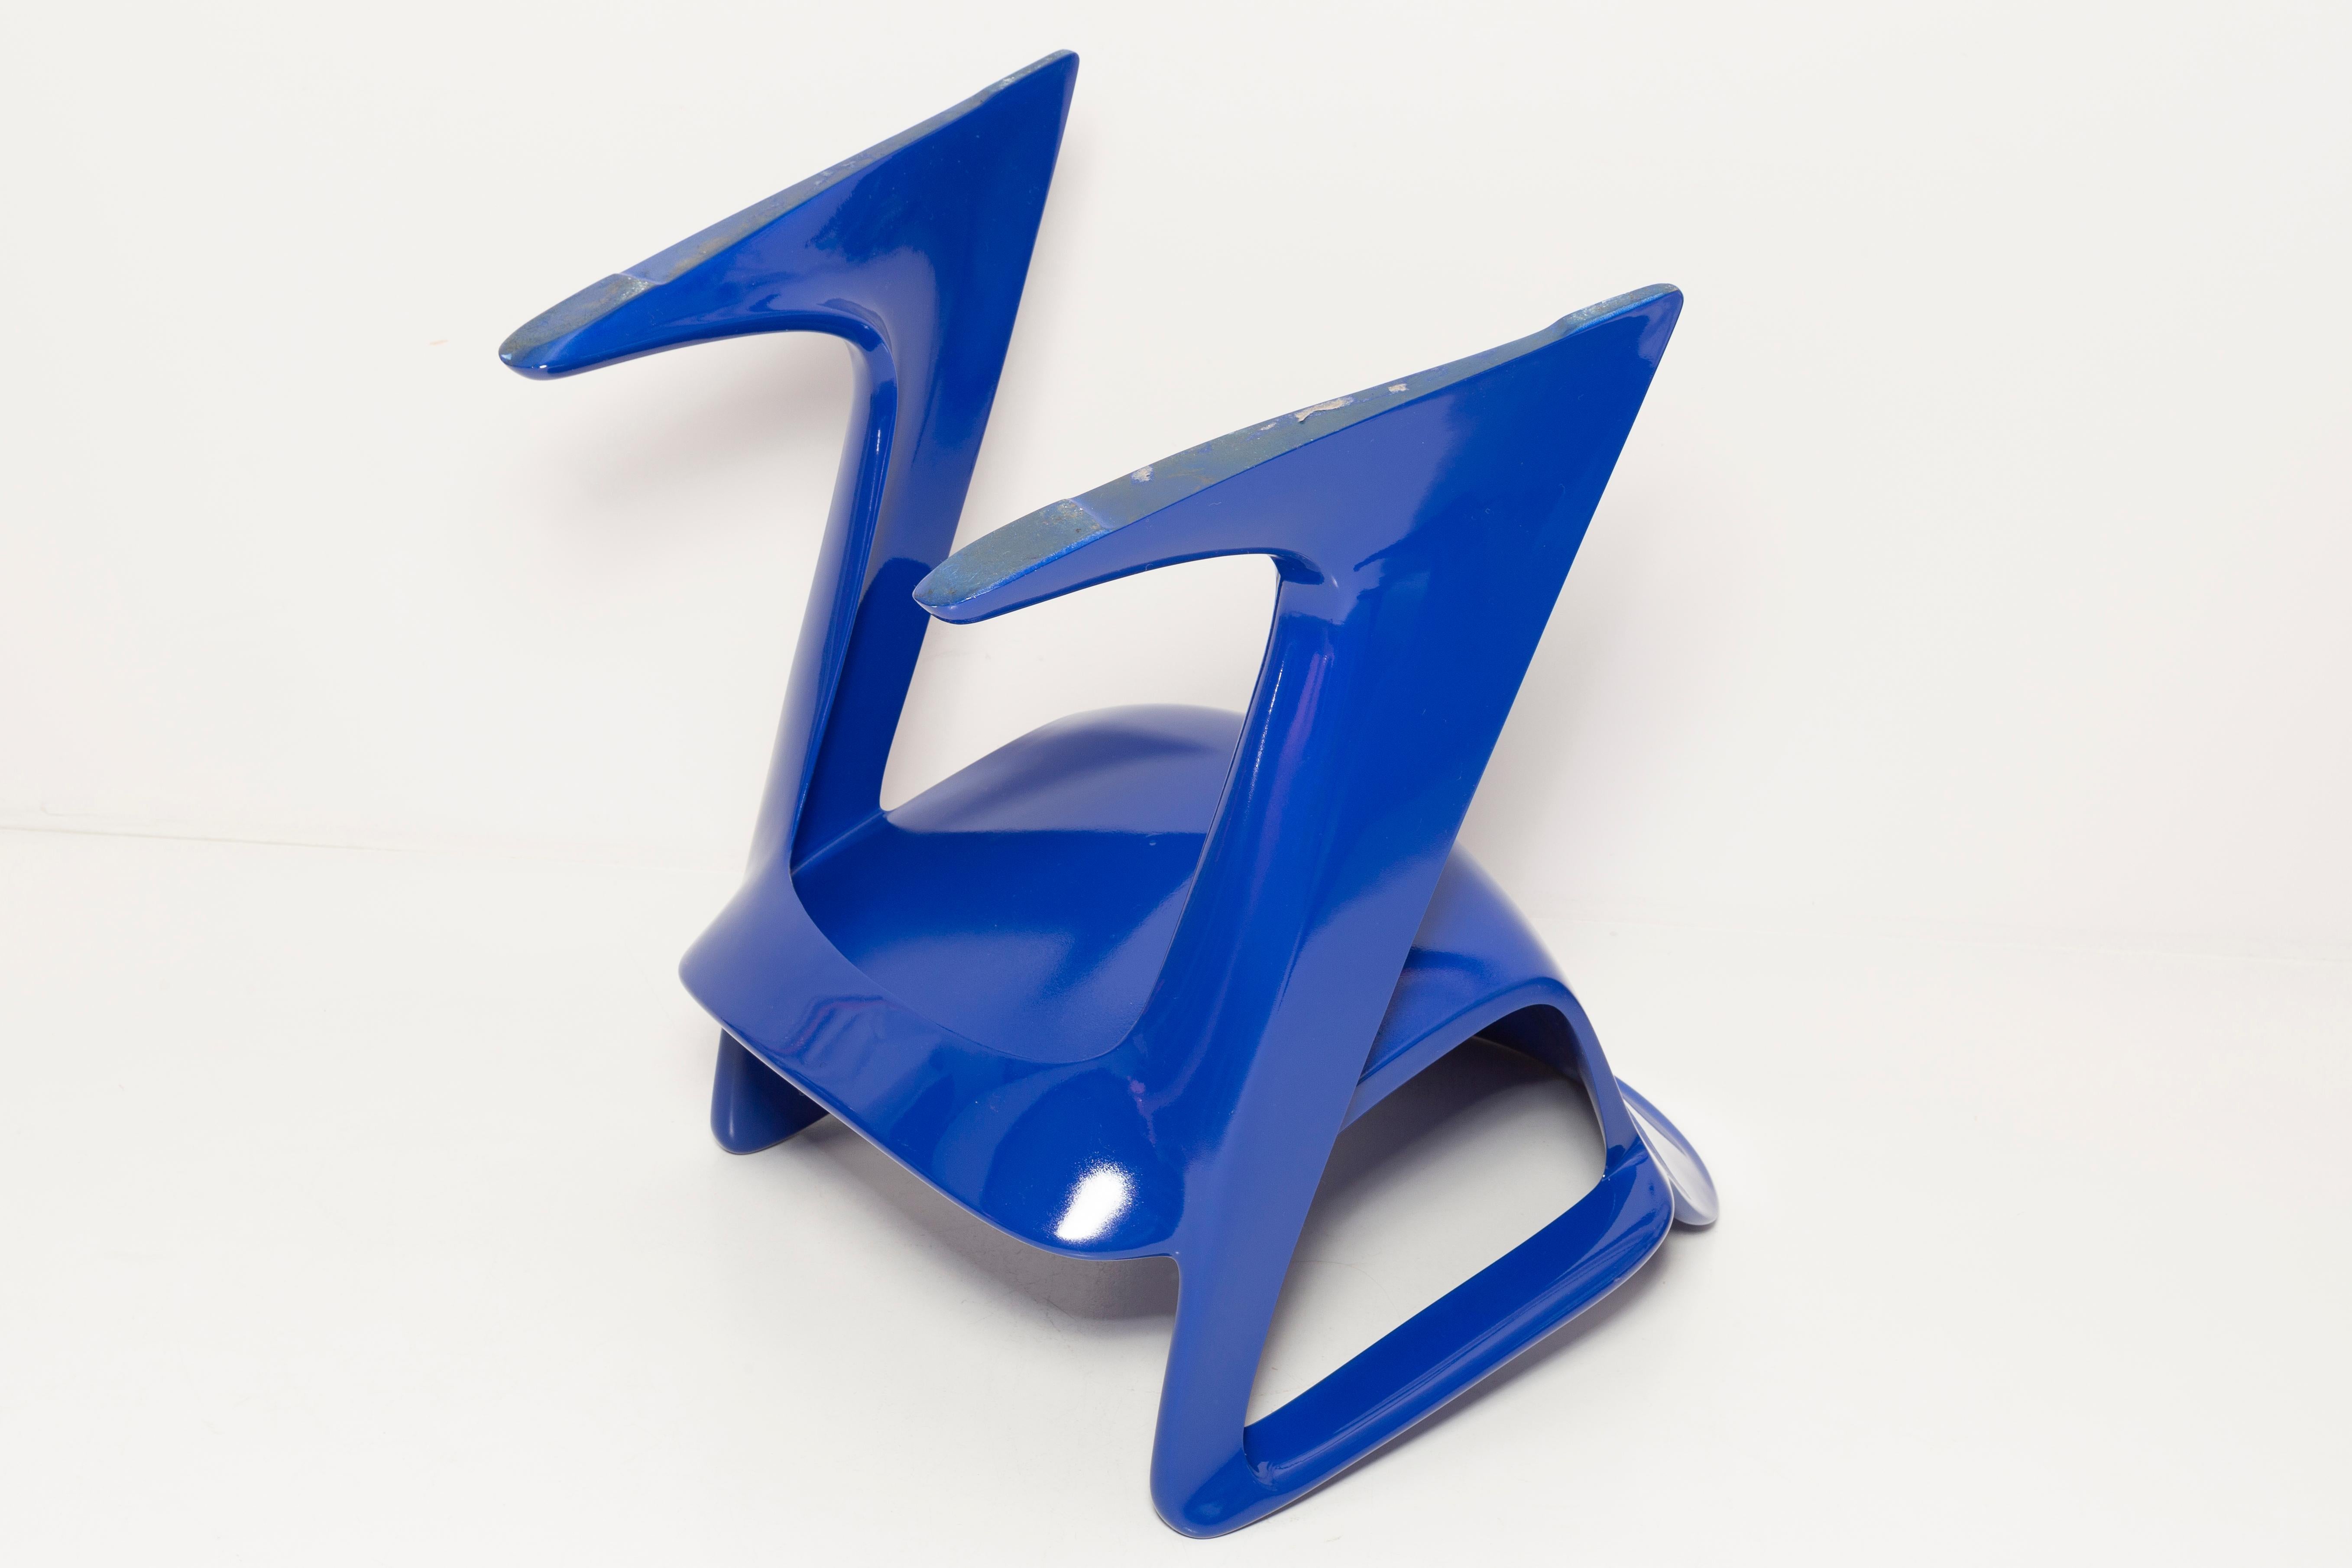 Ultramarine Blue Kangaroo Chair Designed by Ernst Moeckl, Germany, 1968 For Sale 1